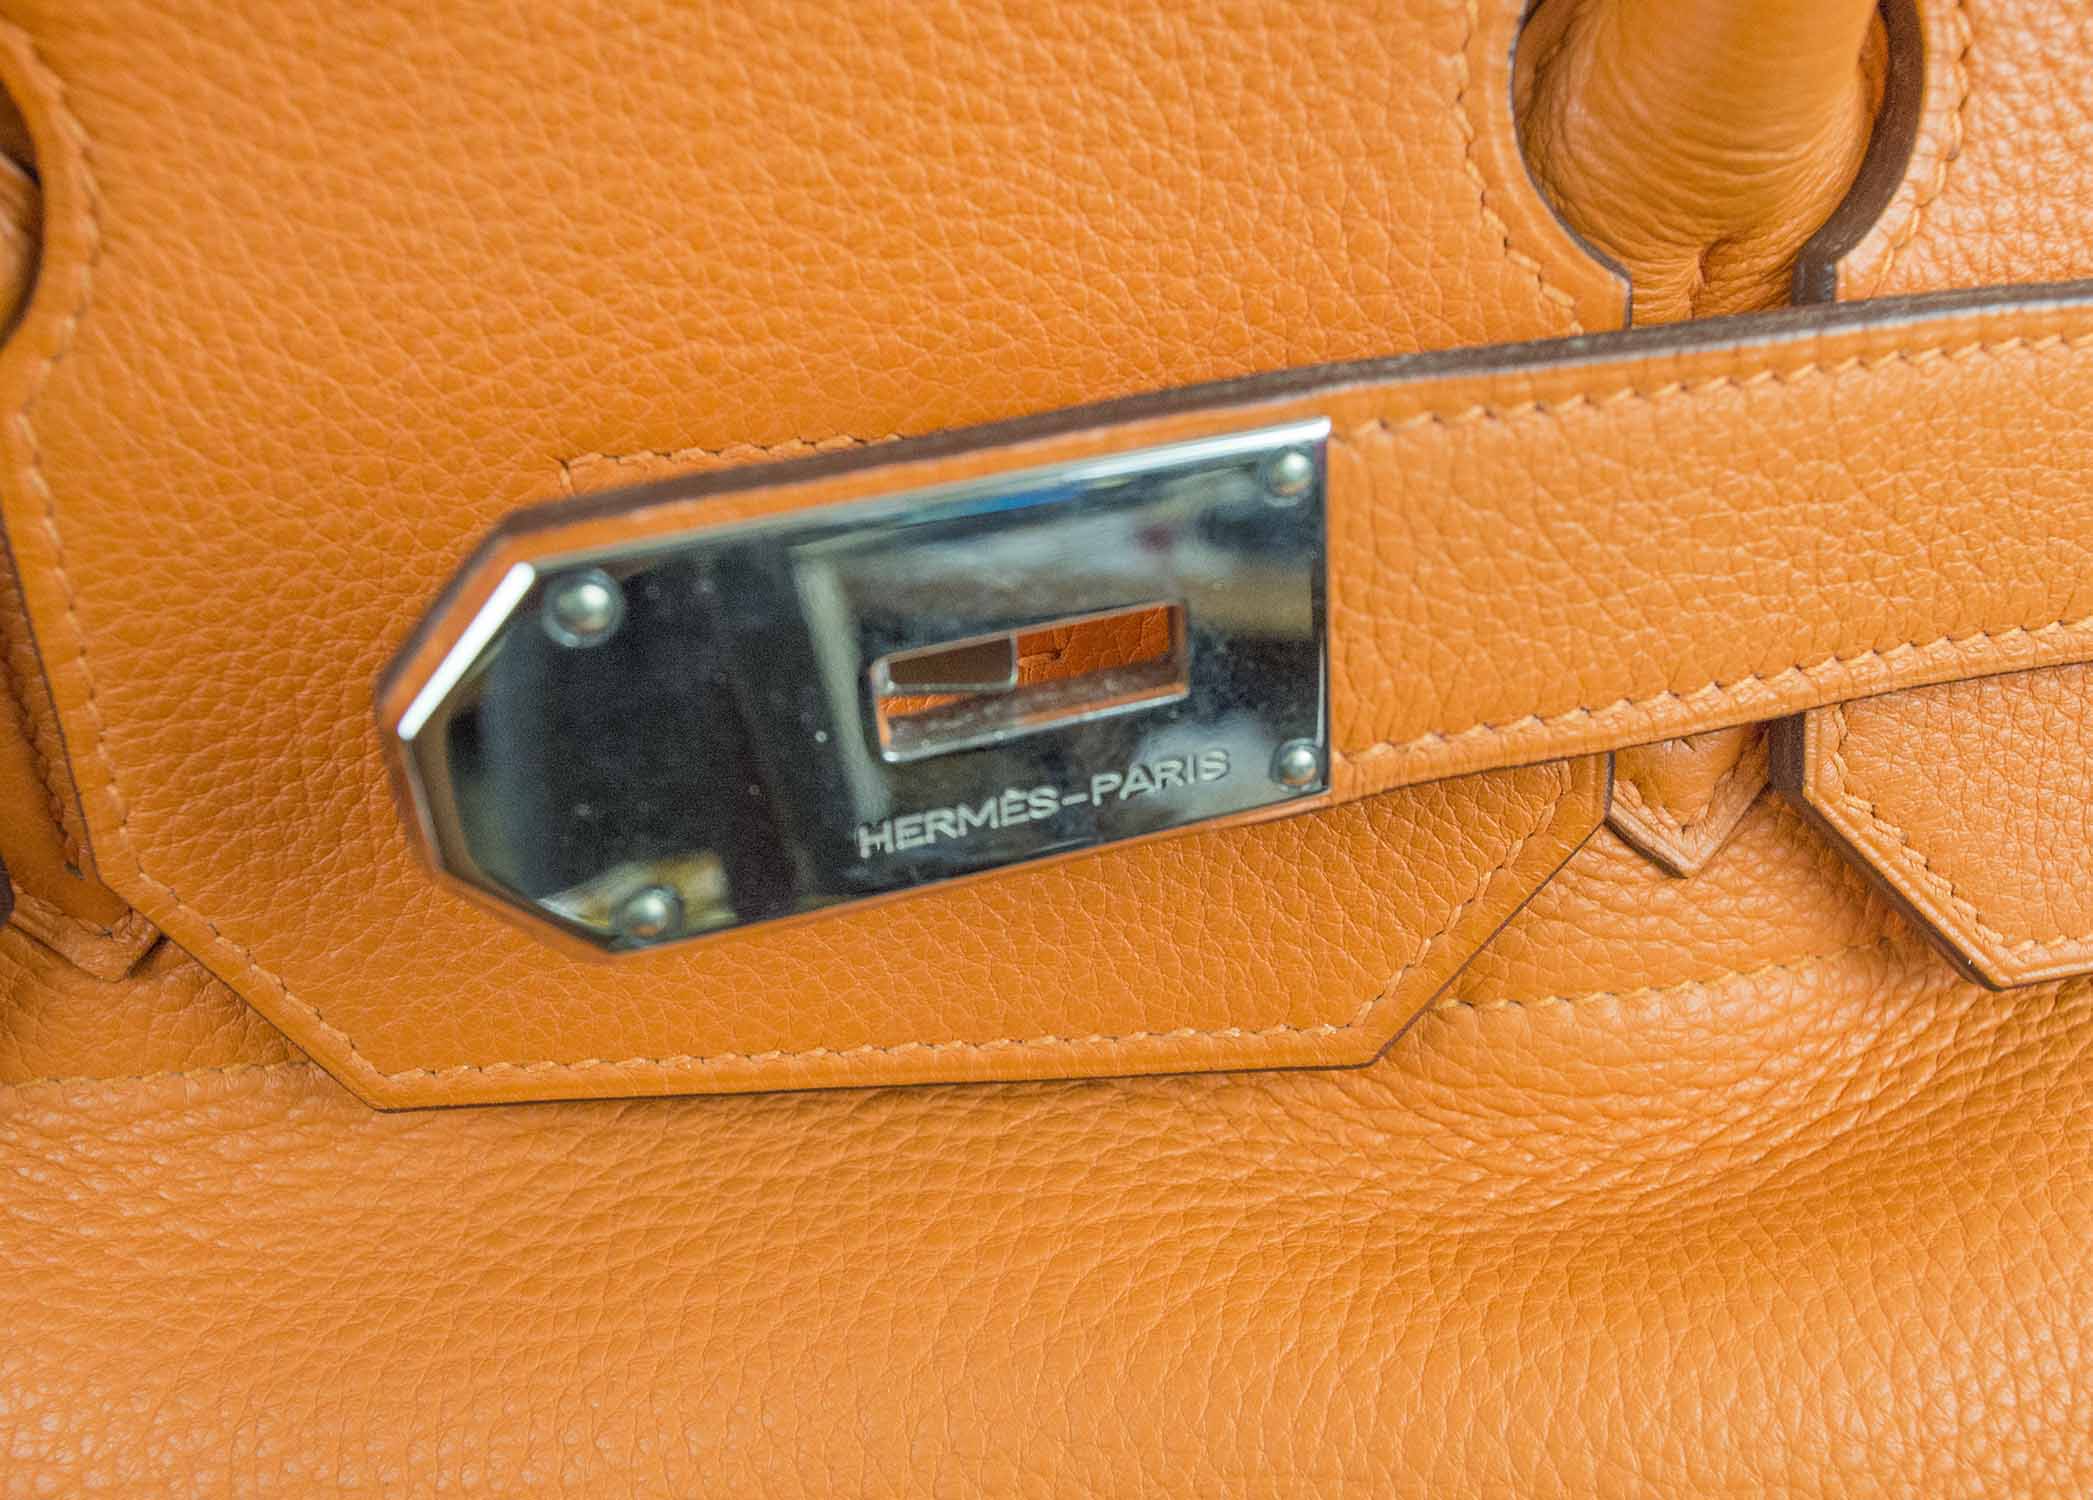 Hermes Birkin Bag 30cm Orange Clemence Gold Hardware